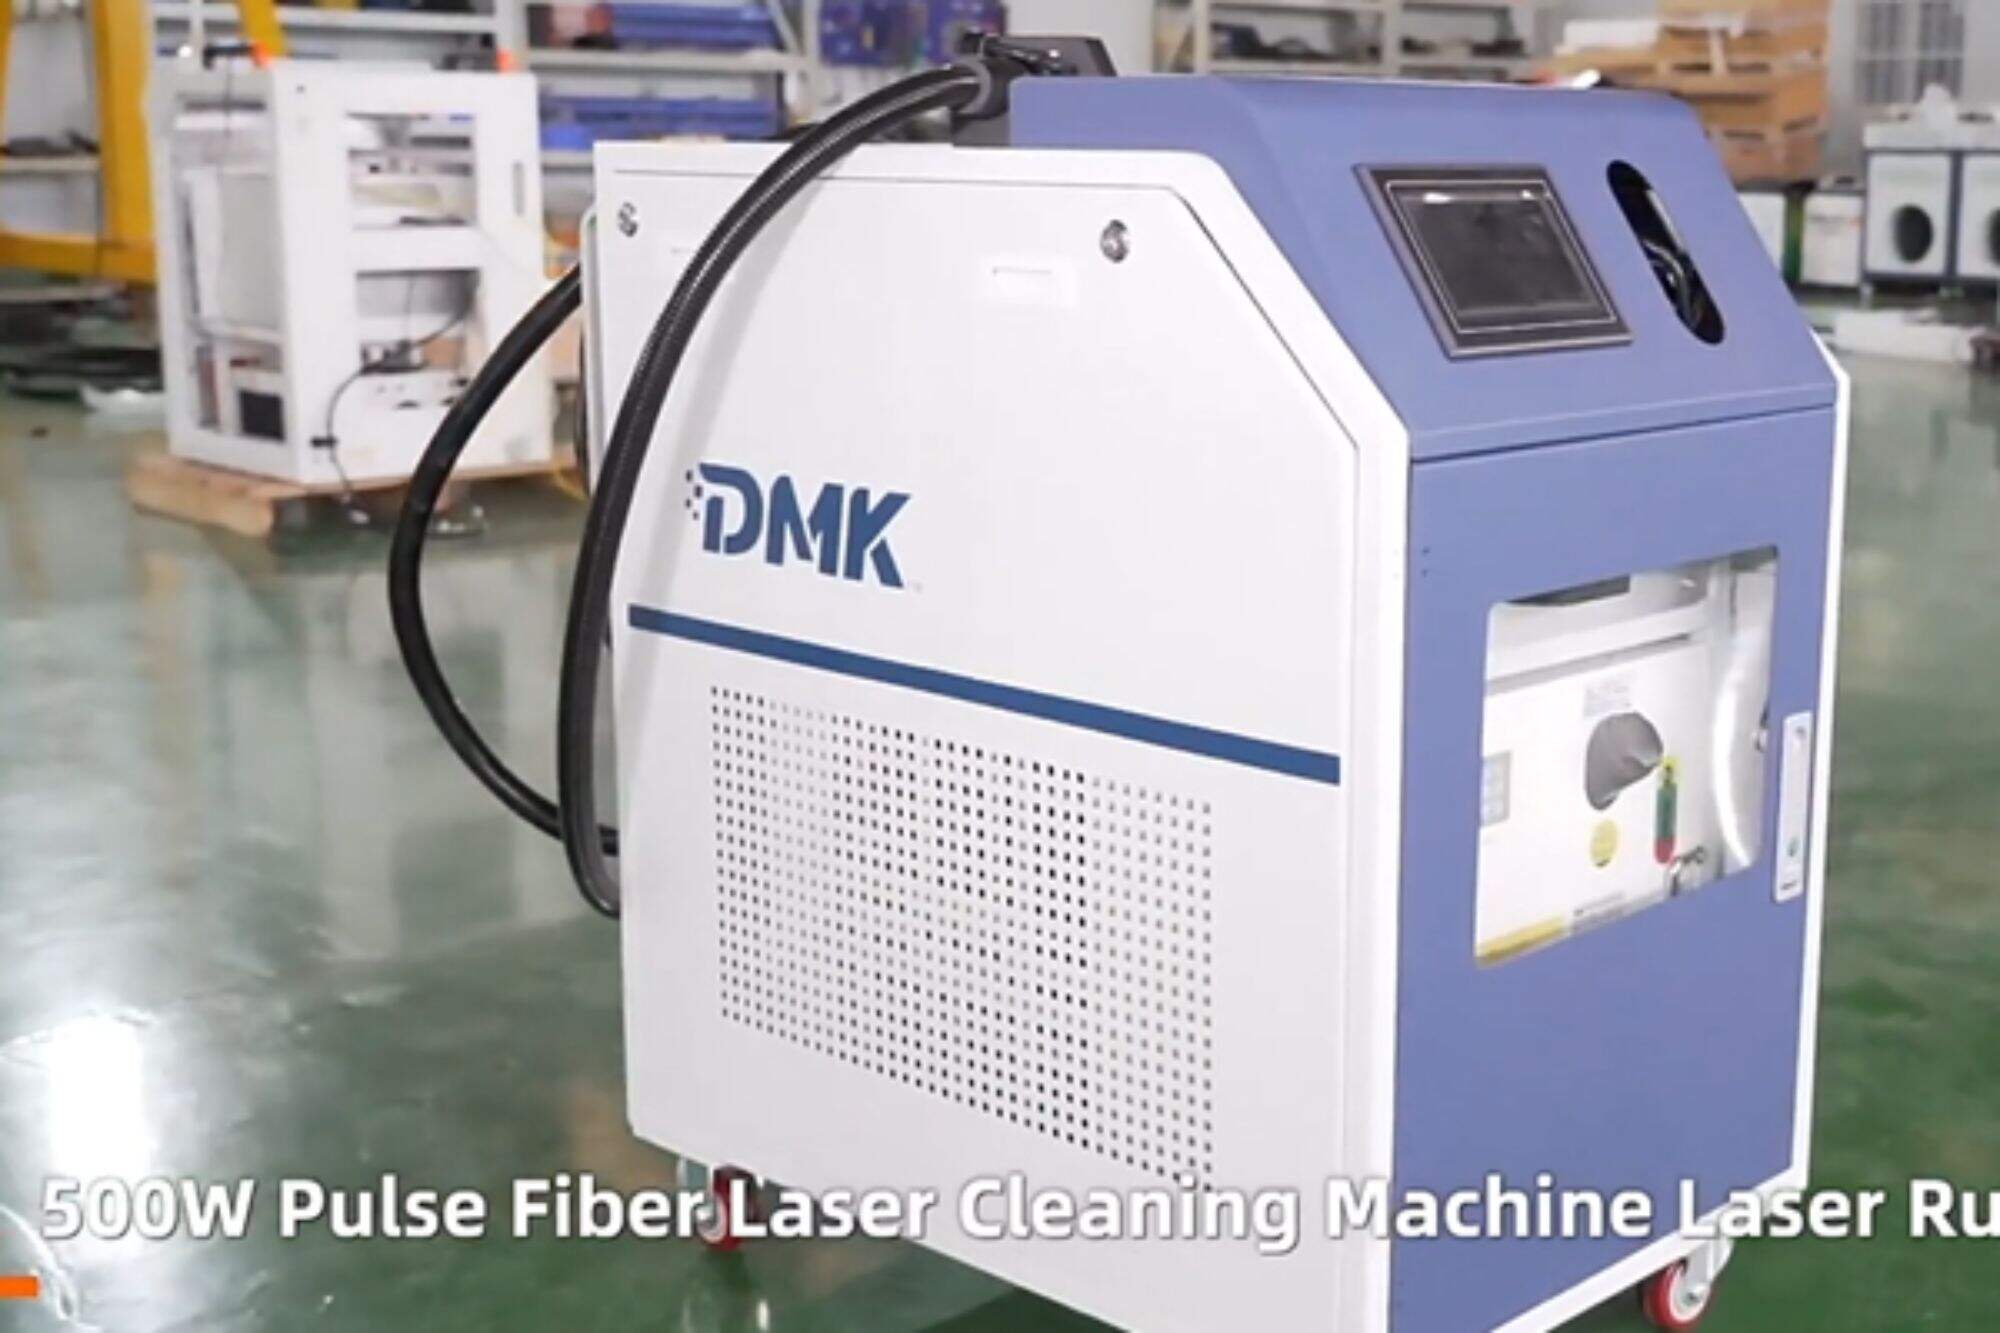 Імпульсна лазерна очисна машина DMK 500w